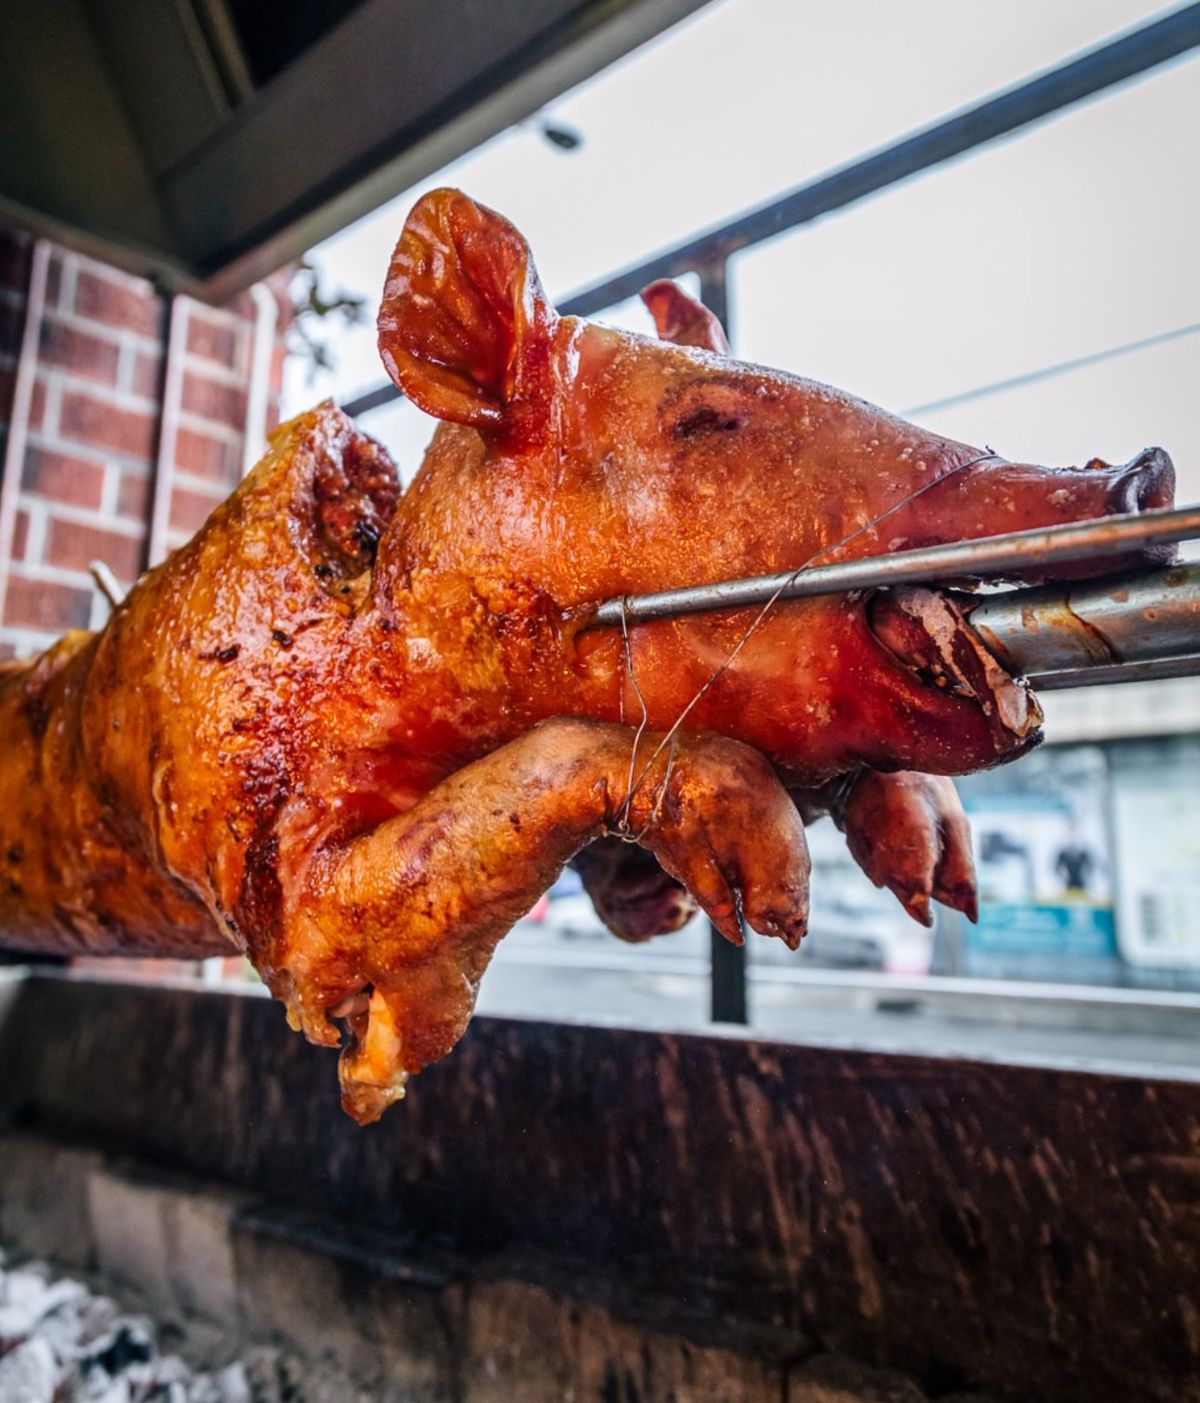 Tasting Australia - Let's have a Porking good day!